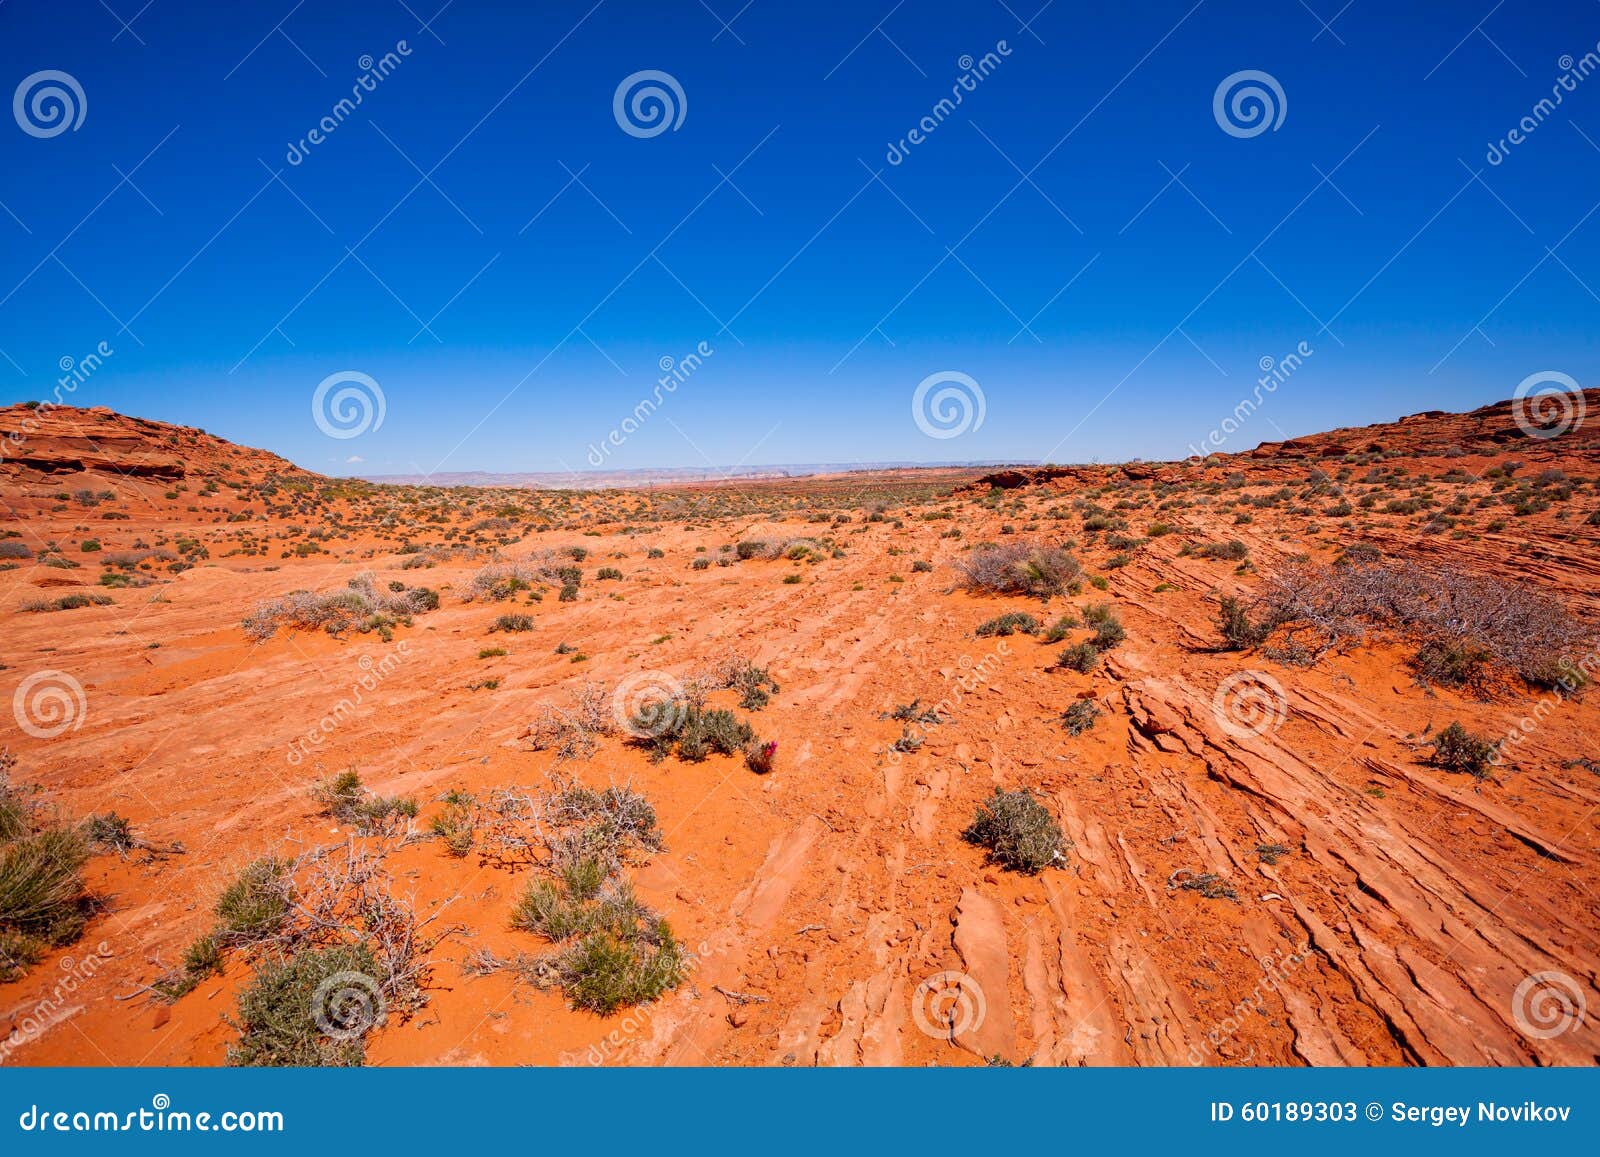 vast desert near colorado river canyons, usa